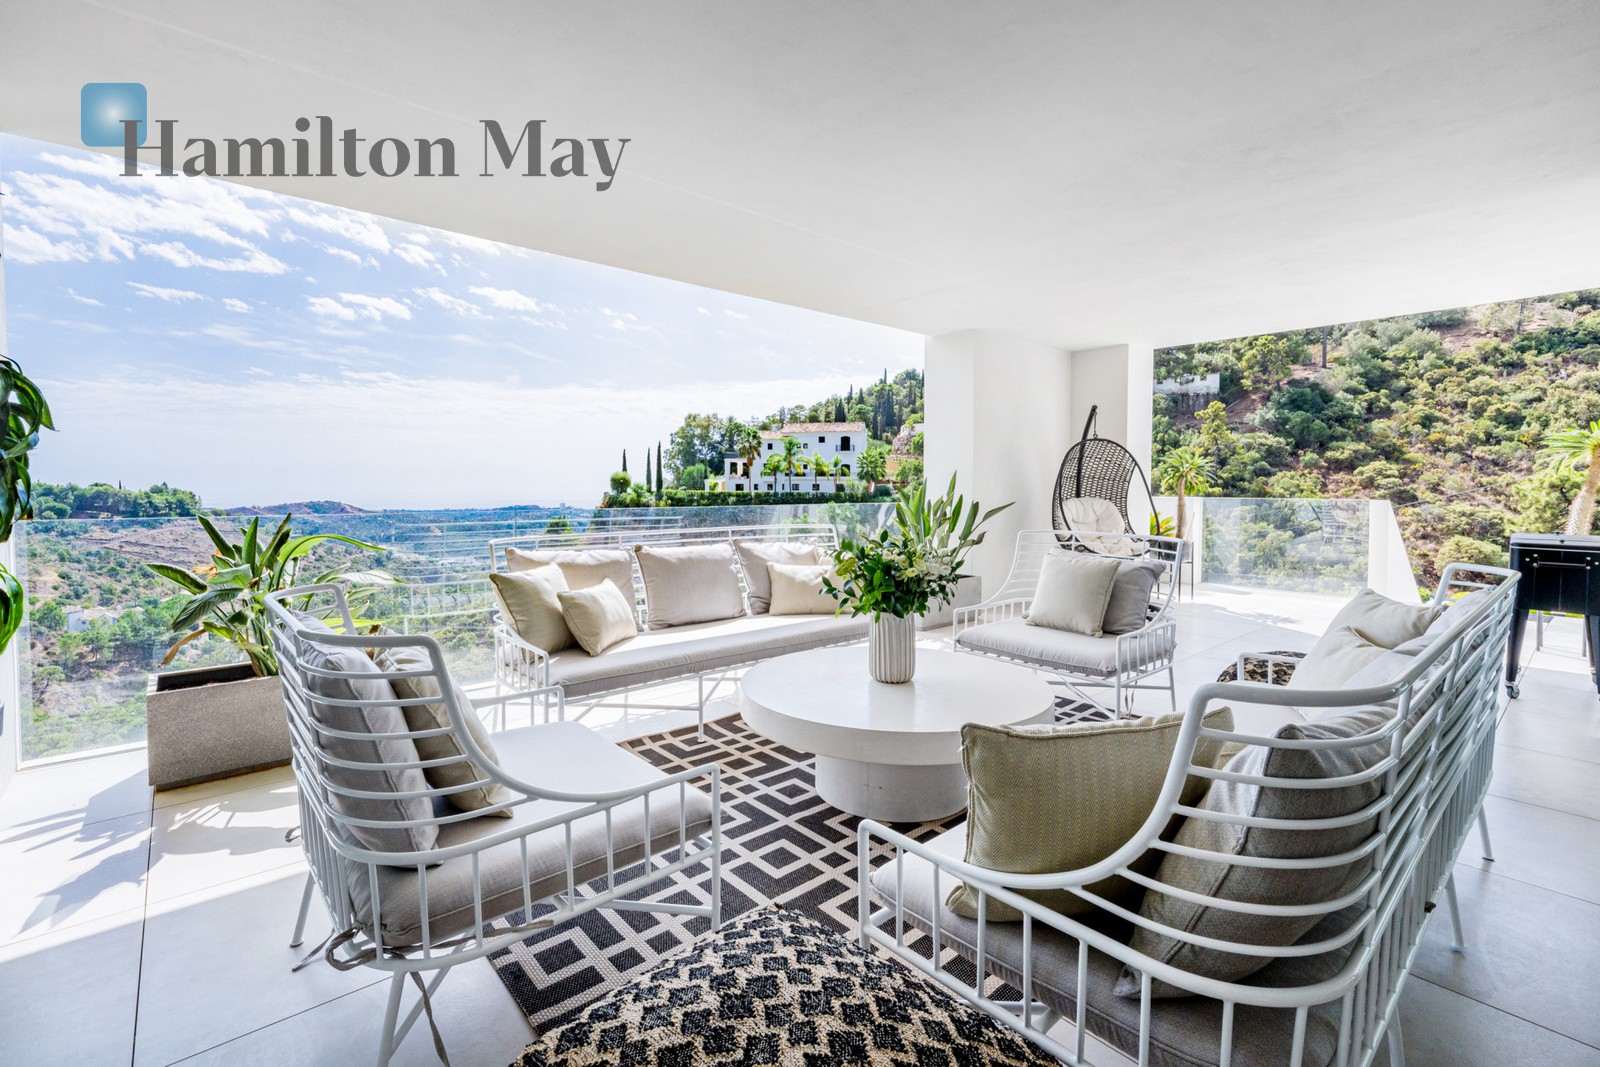 Stunning five bedroom villa located in prestigious El Madroñal, Marbella, with panoramic sea views